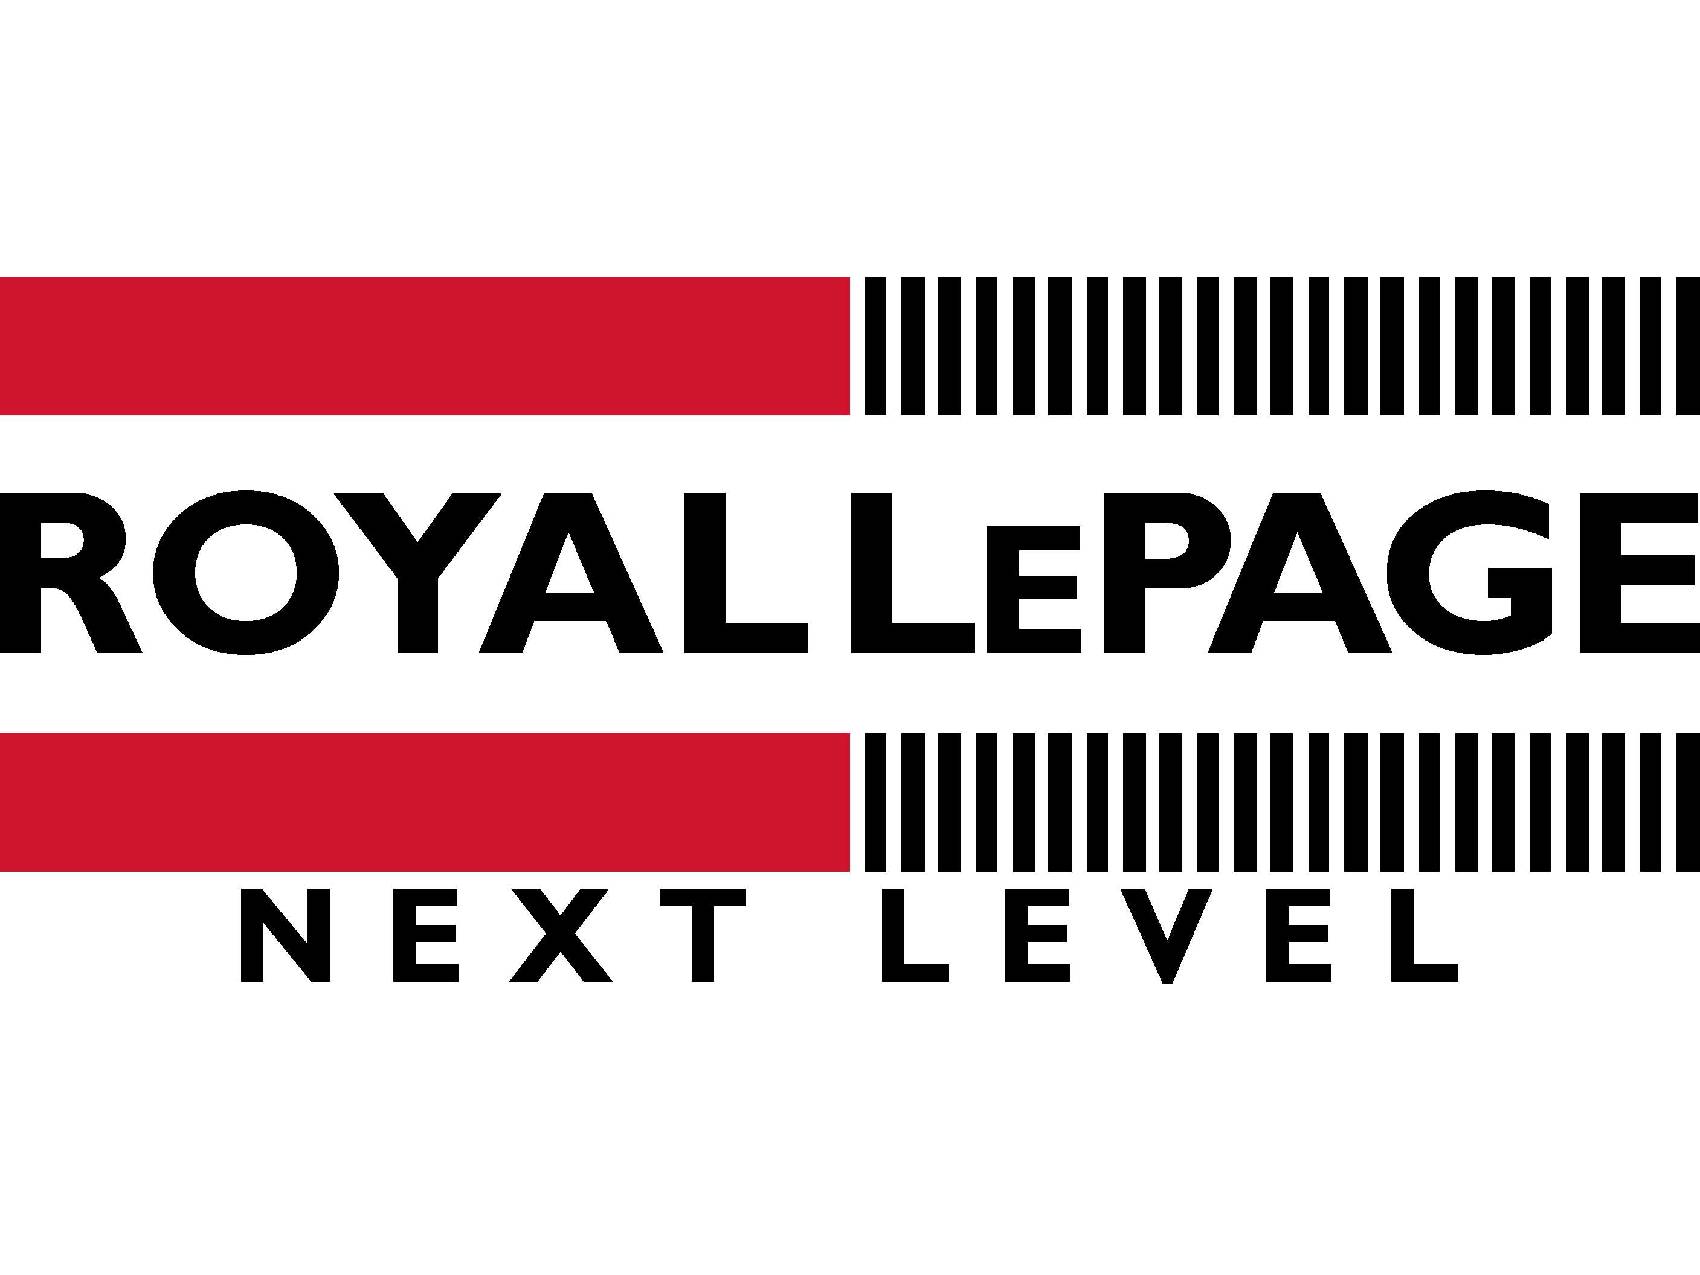 Royal LePage Next Level - 100-1911 Truesdale Drive E., Regina, SK, S4V 2N1